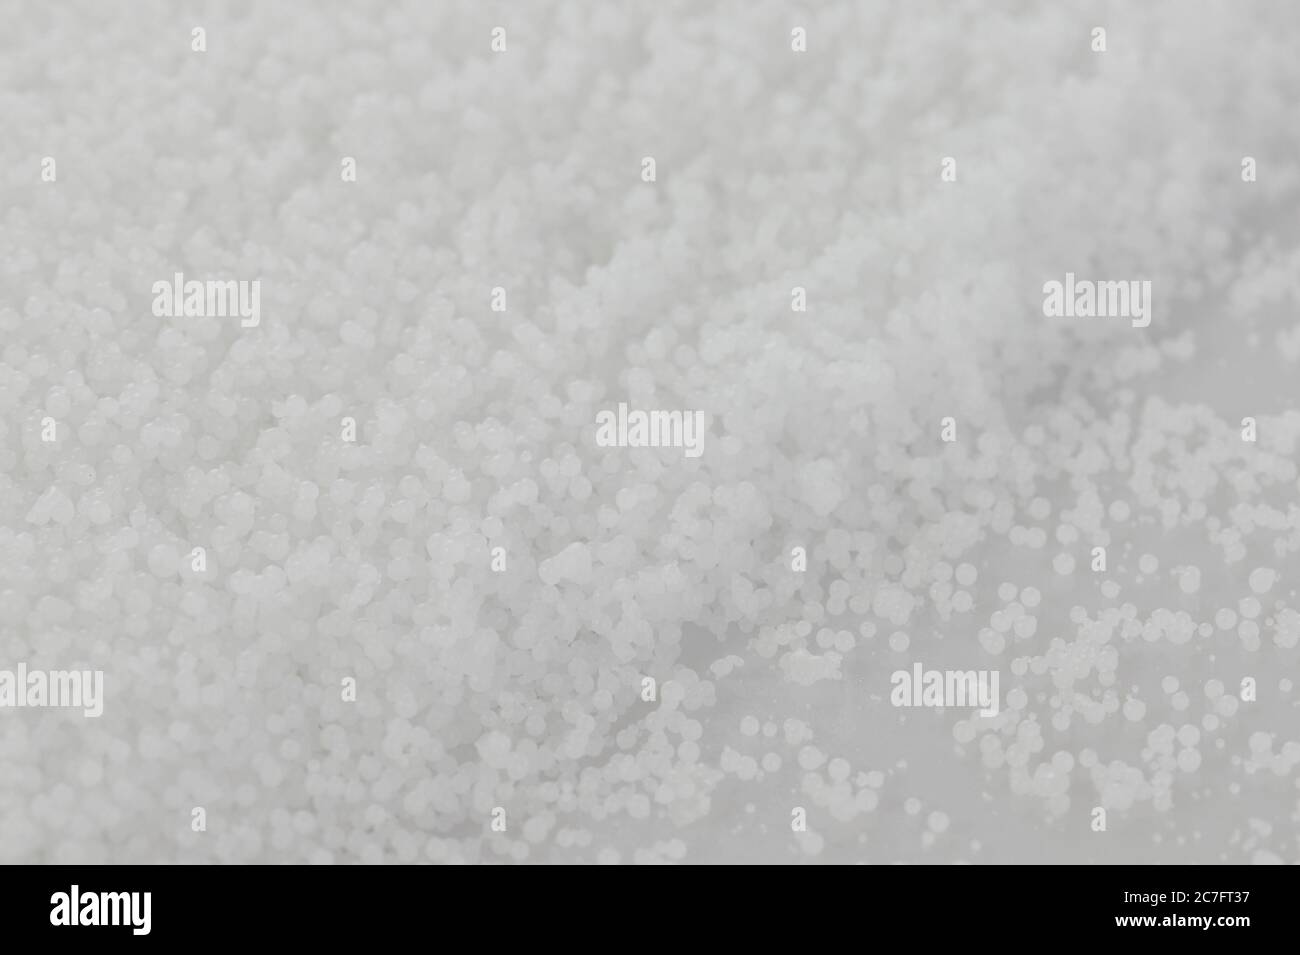 White polymer granules pattern macro close up view Stock Photo